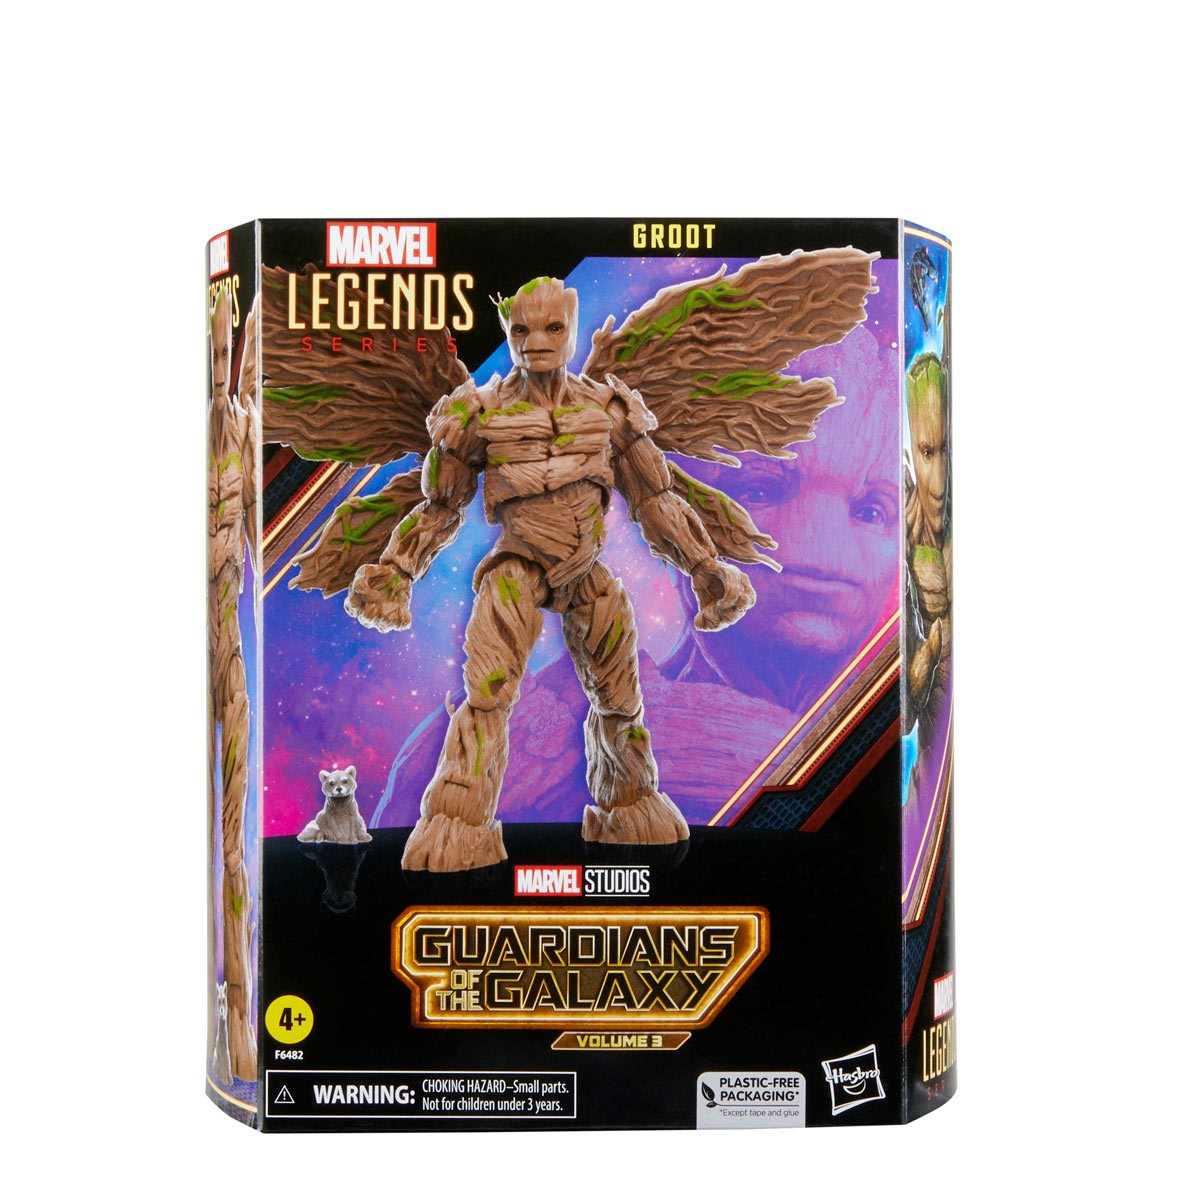 Guardians of the Galaxy Comics Marvel Legends Actionfigur Groot 15 cm F64825L00 5010994181673